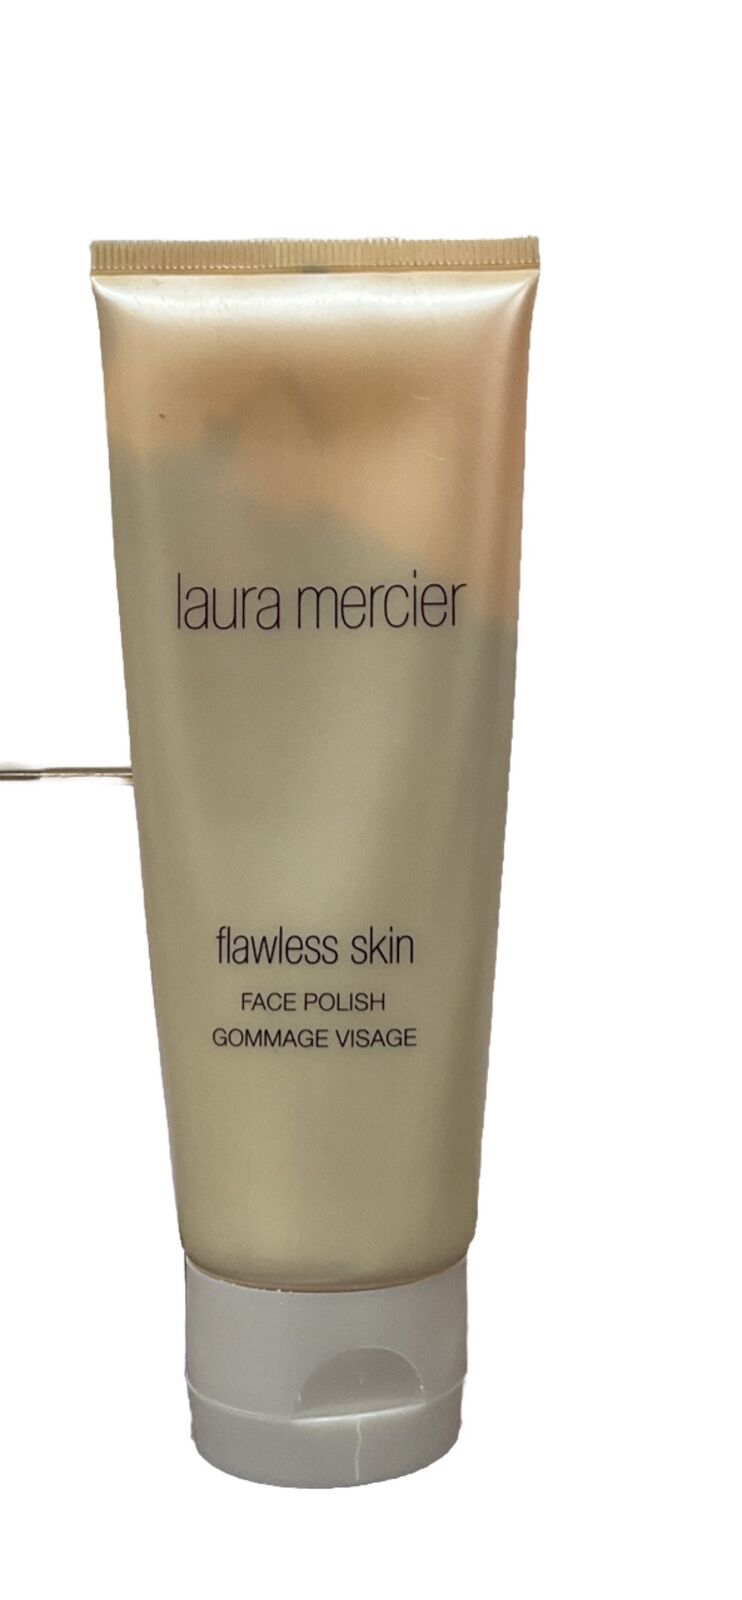 Laura Mercier Flawless Skin Face Polish Scrub Exfoliator full as pictured